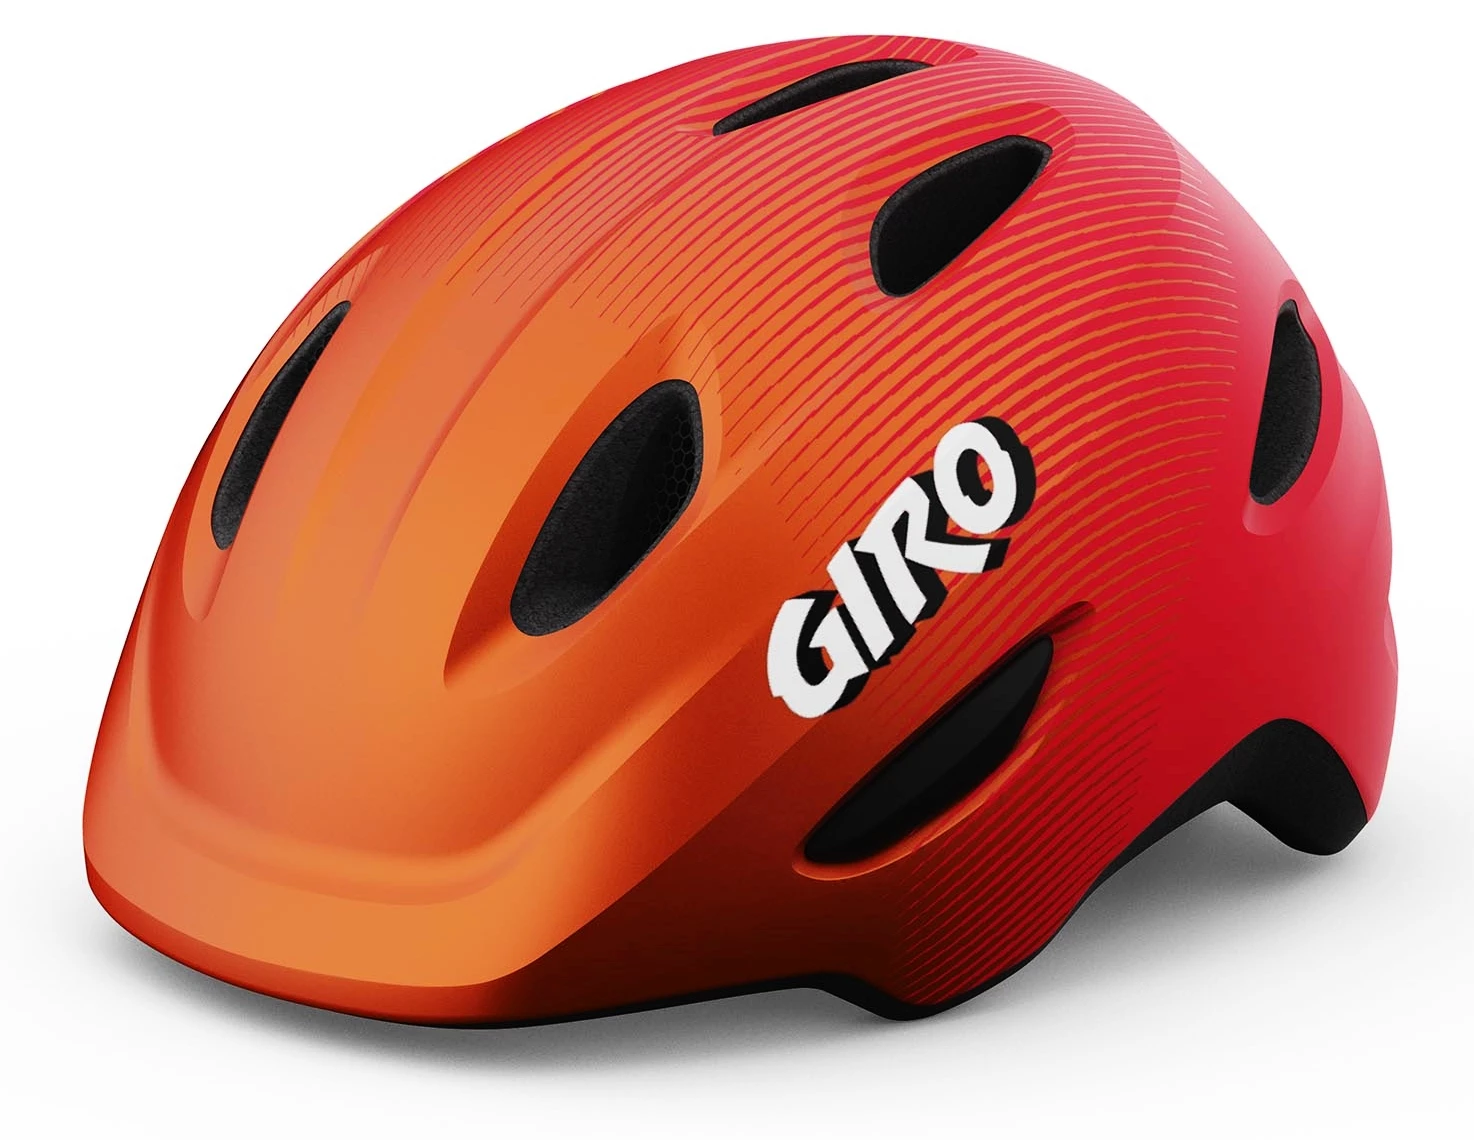 Dětská helma Giro  Scamp